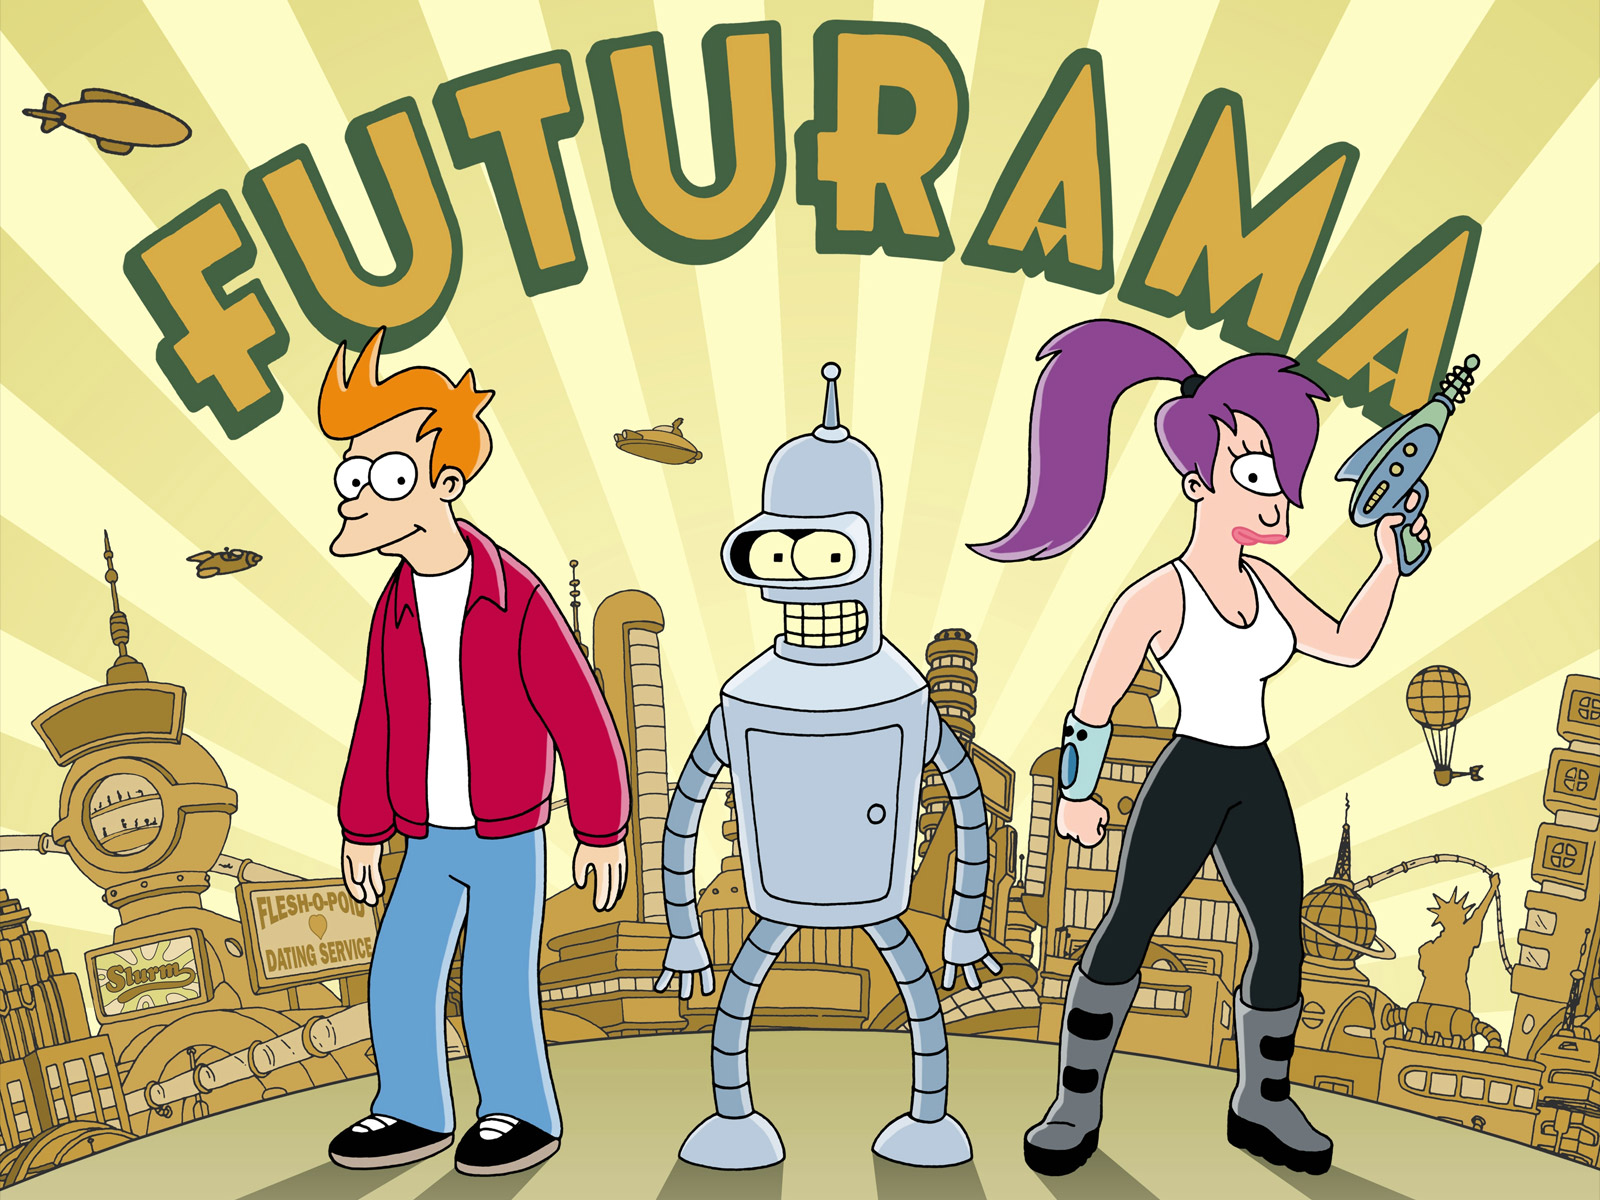 Futurama characters Leela, Fry, and Bender on a high-definition desktop wallpaper.